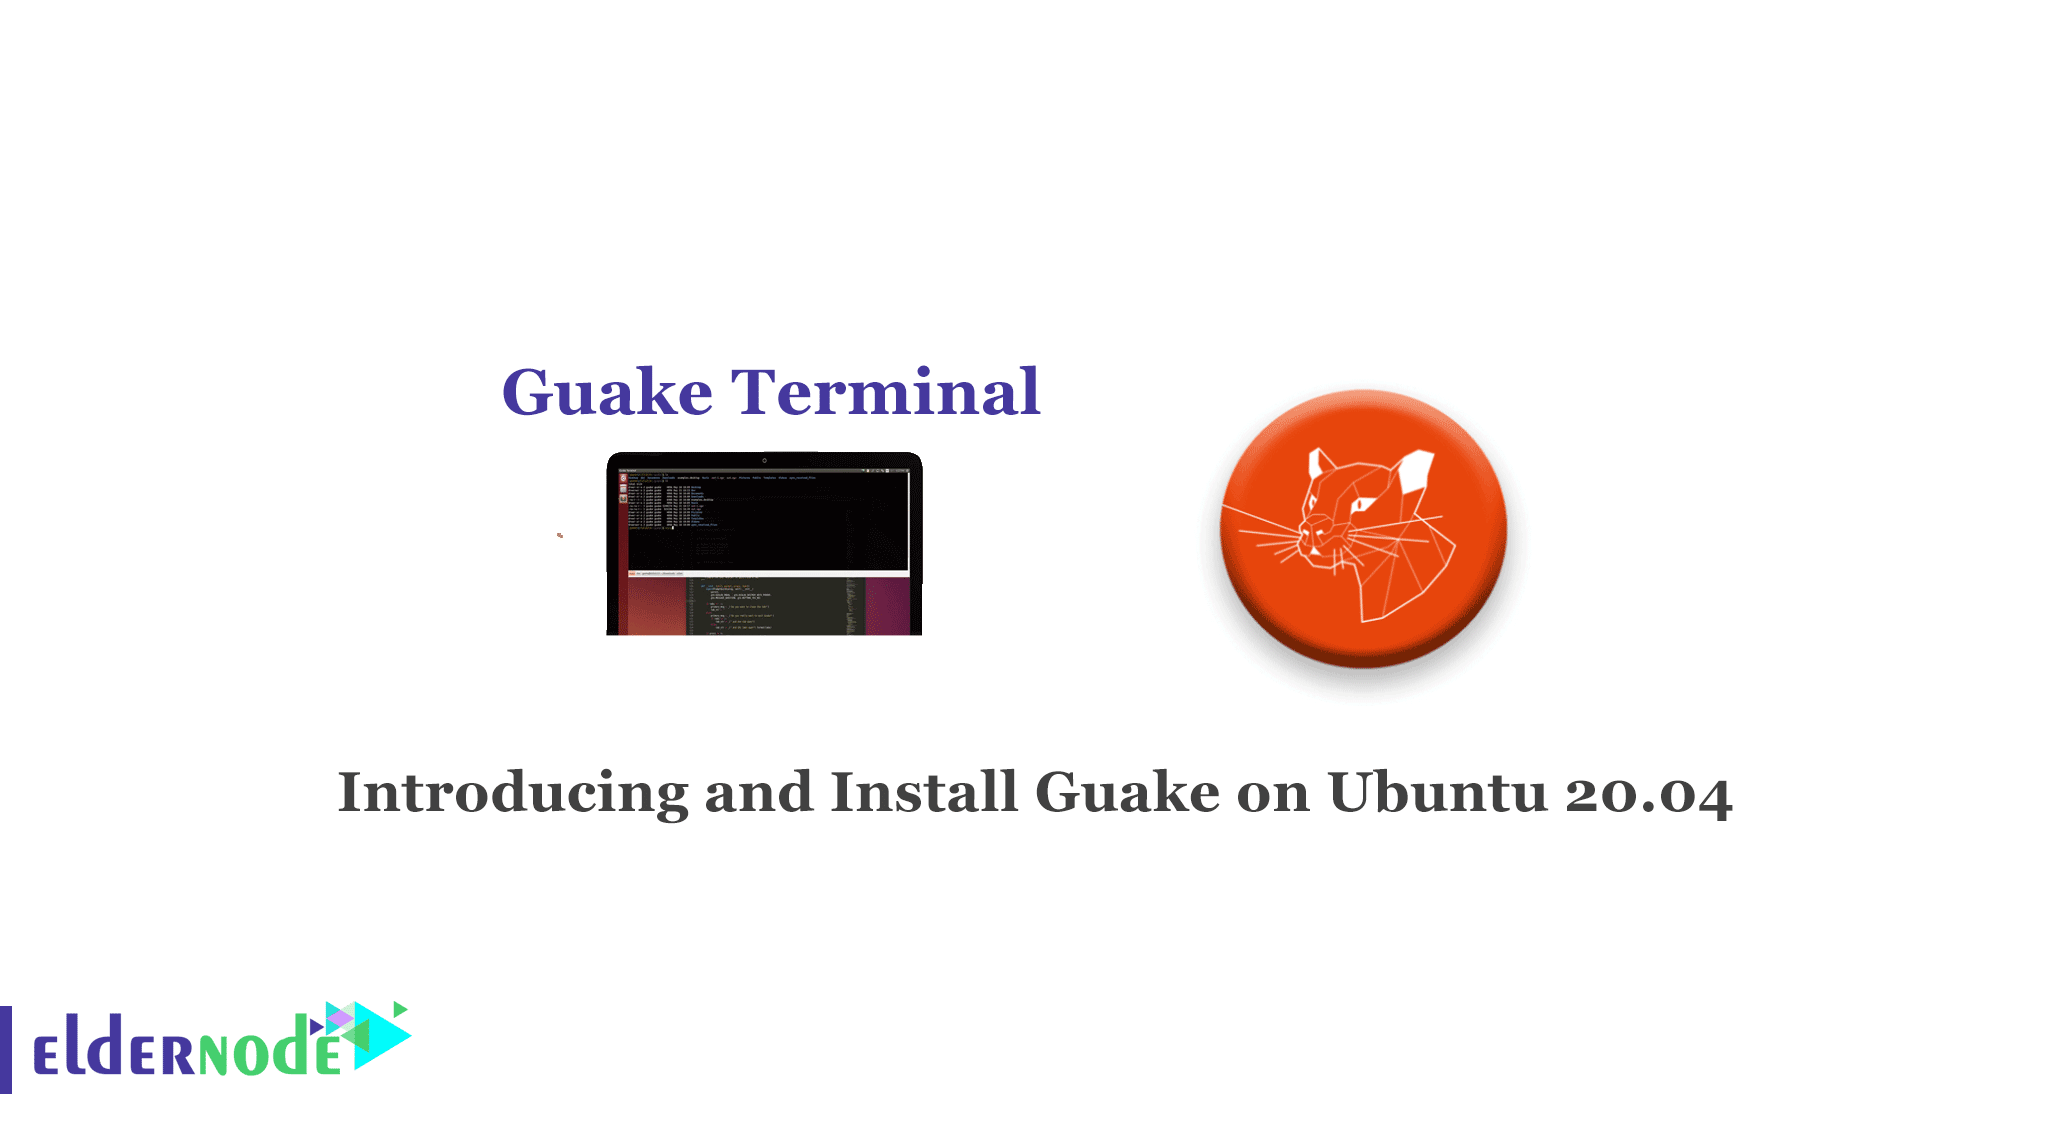 Introducing and Install Guake on Ubuntu 20.04